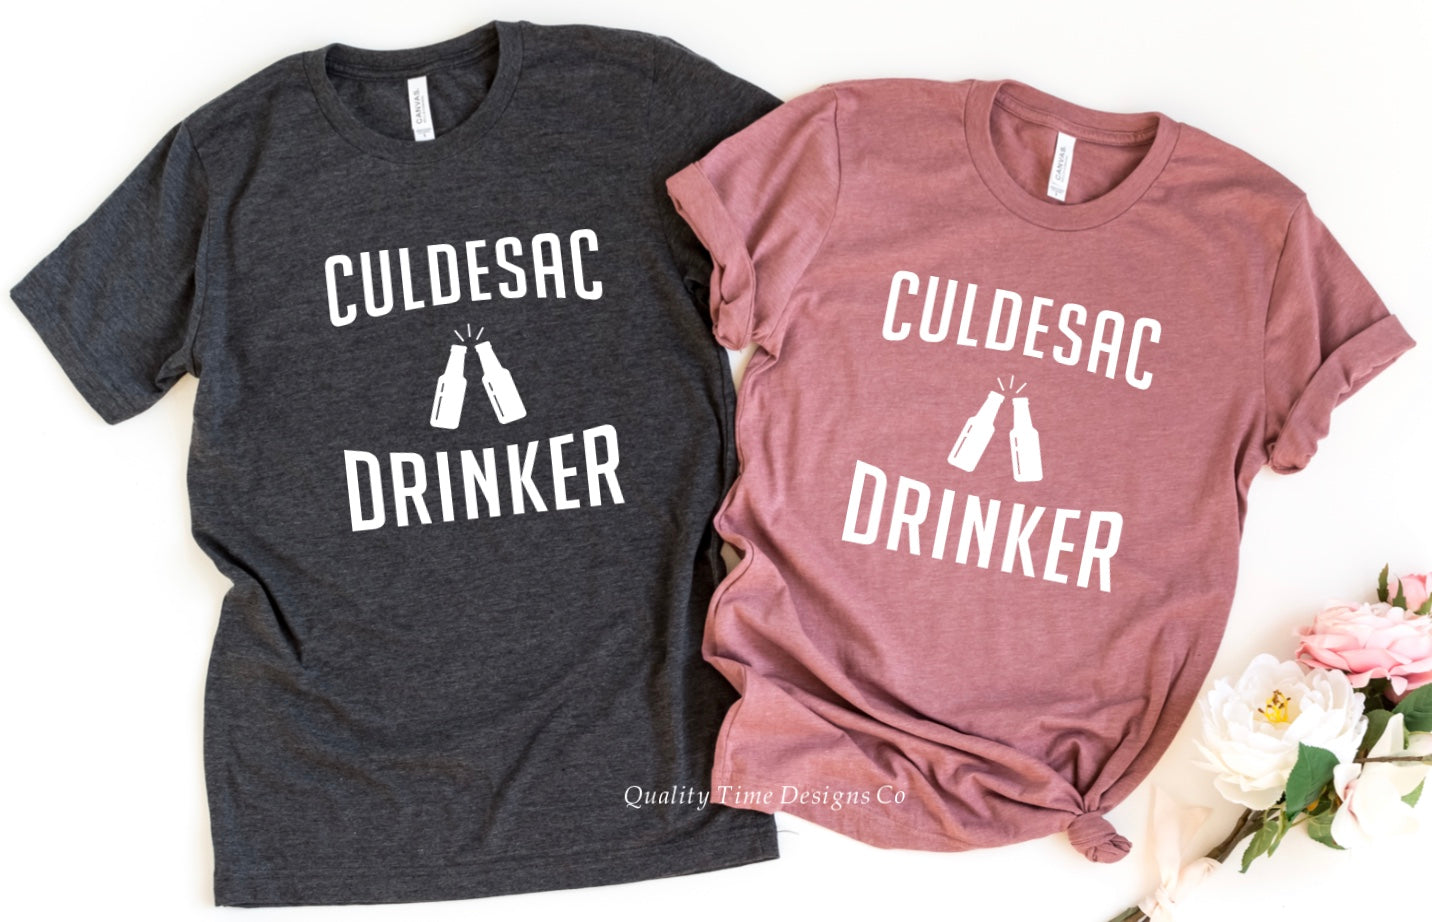 Culdesac drinker t-shirt 